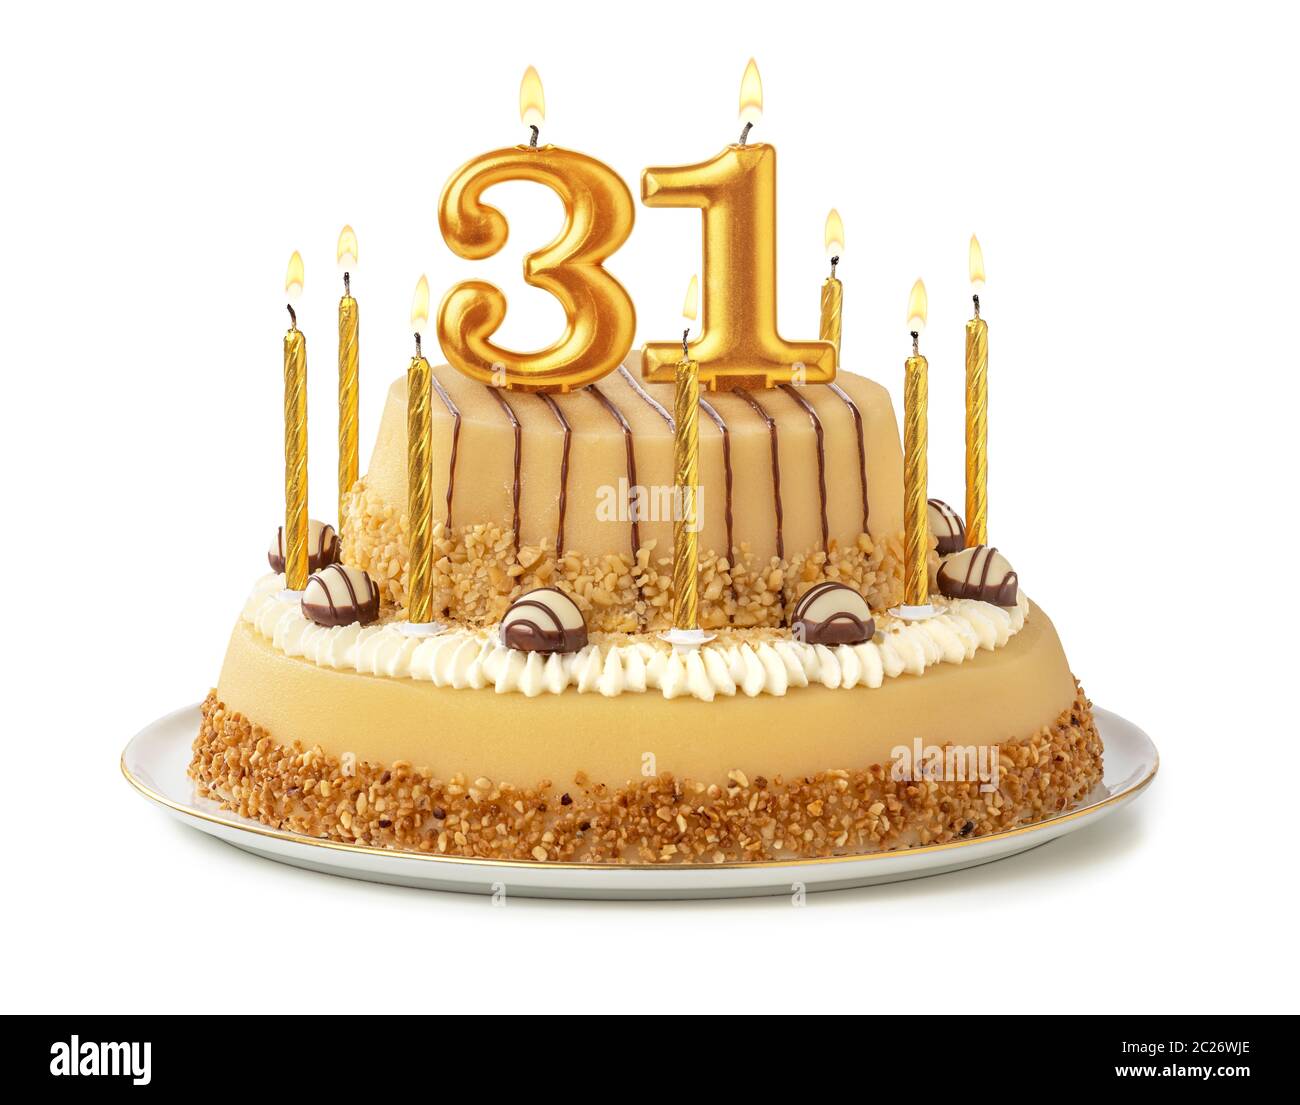 31 Two Wild Birthday Cake Ideas : Rustic Two Tier Two Wild Cake